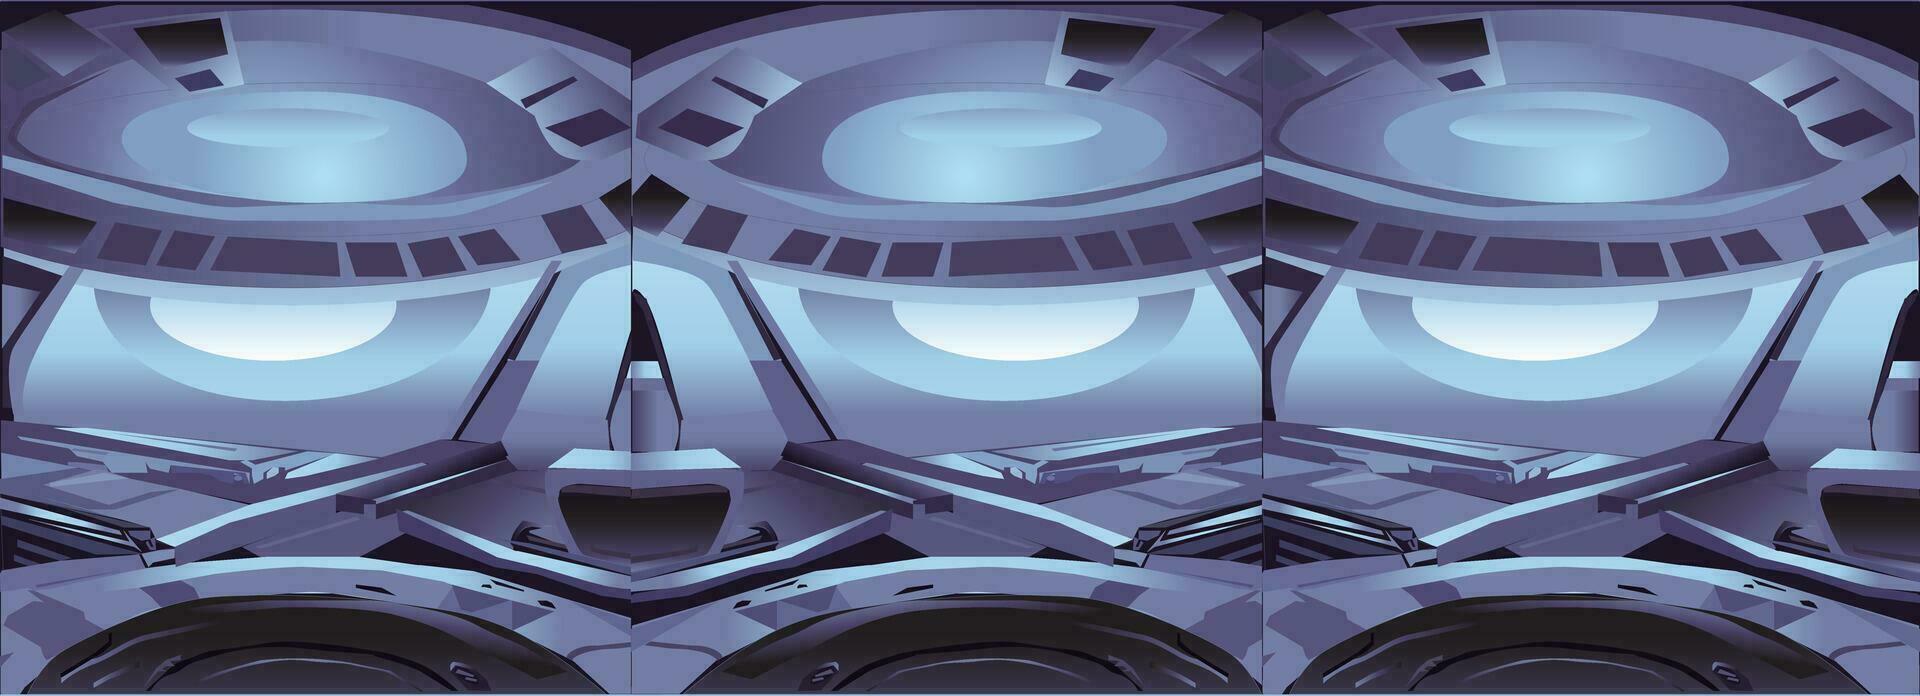 Spaceship Interior Game Background vector